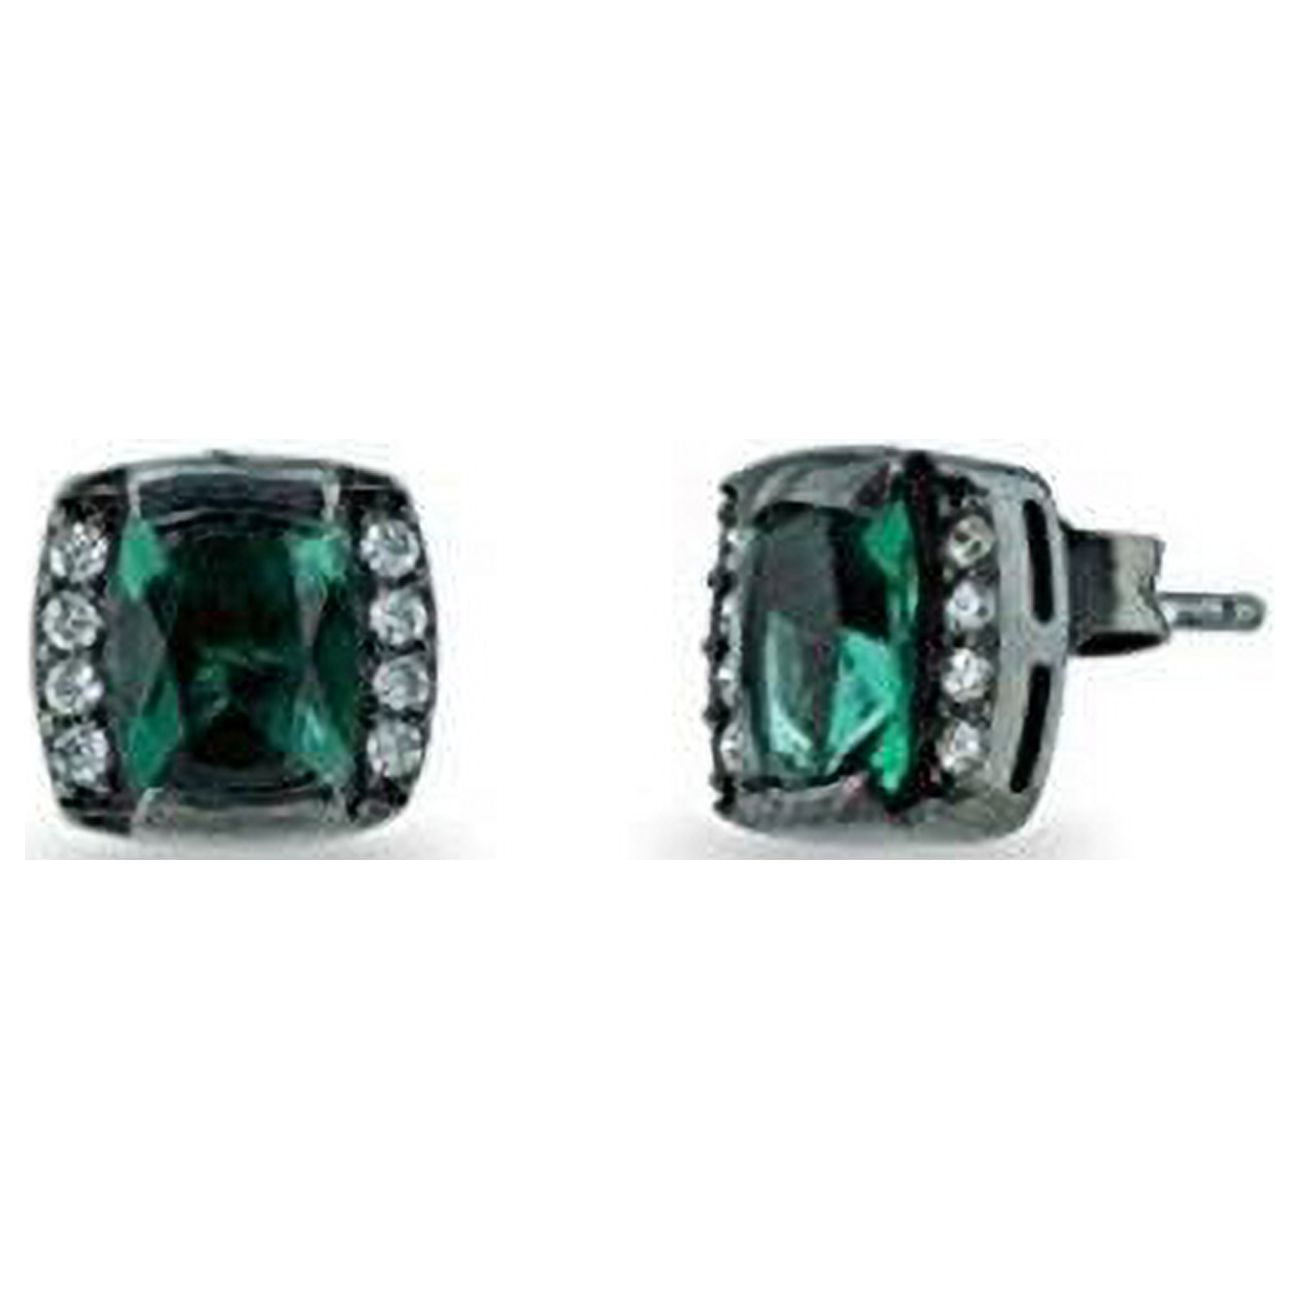 6 Mm X 4 Mm Silver Black Rhodium Plated Emerald Cut Cubic Zirconia Stud Earrings, Green